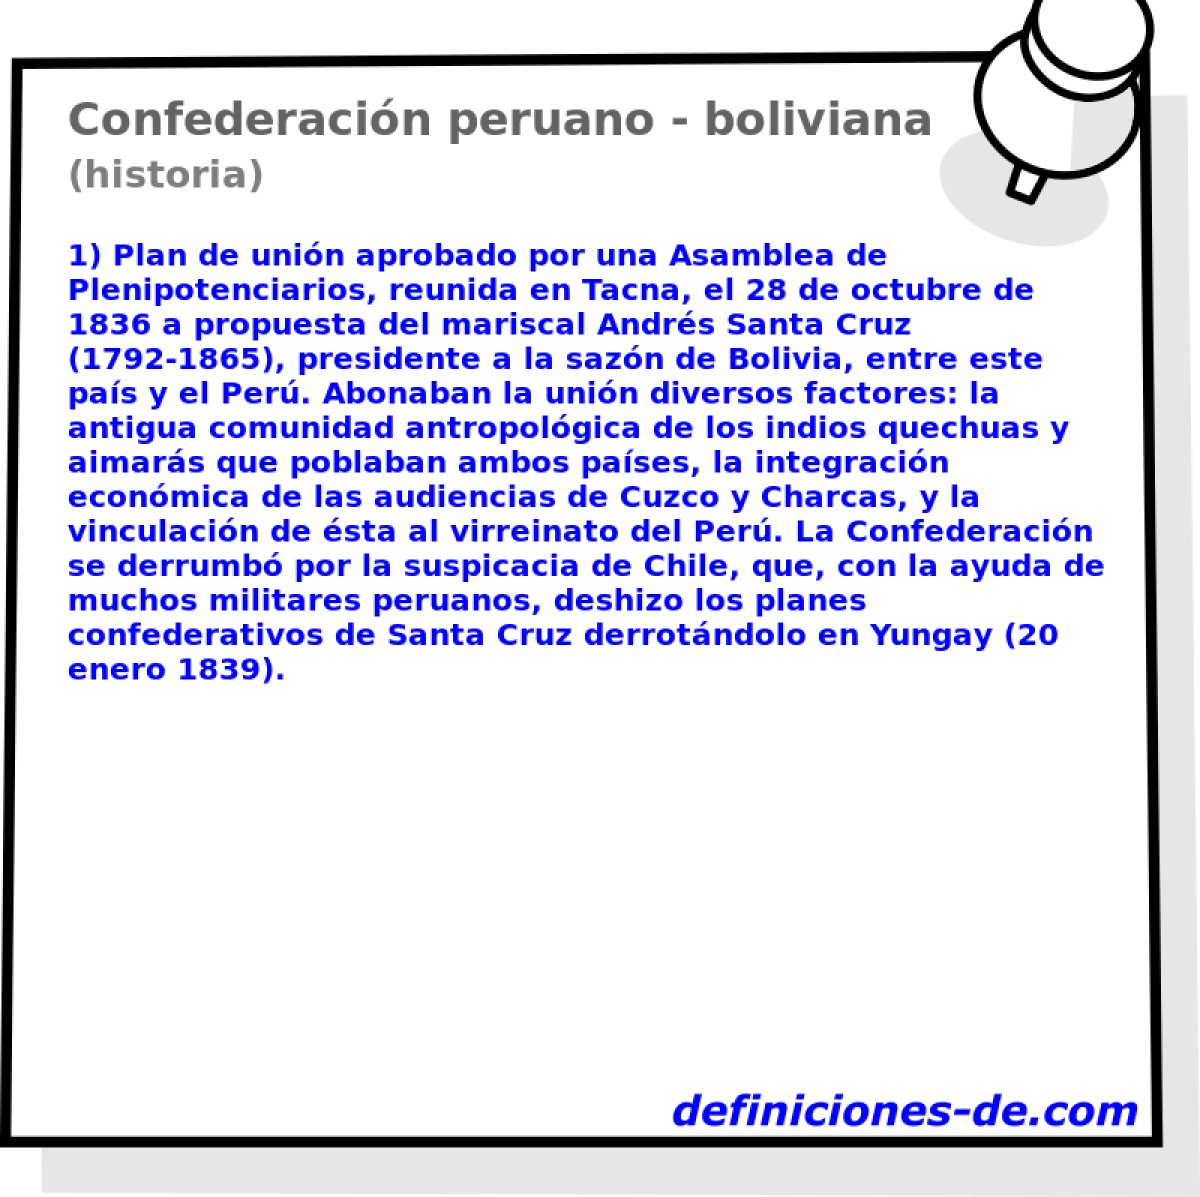 Confederacin peruano - boliviana (historia)